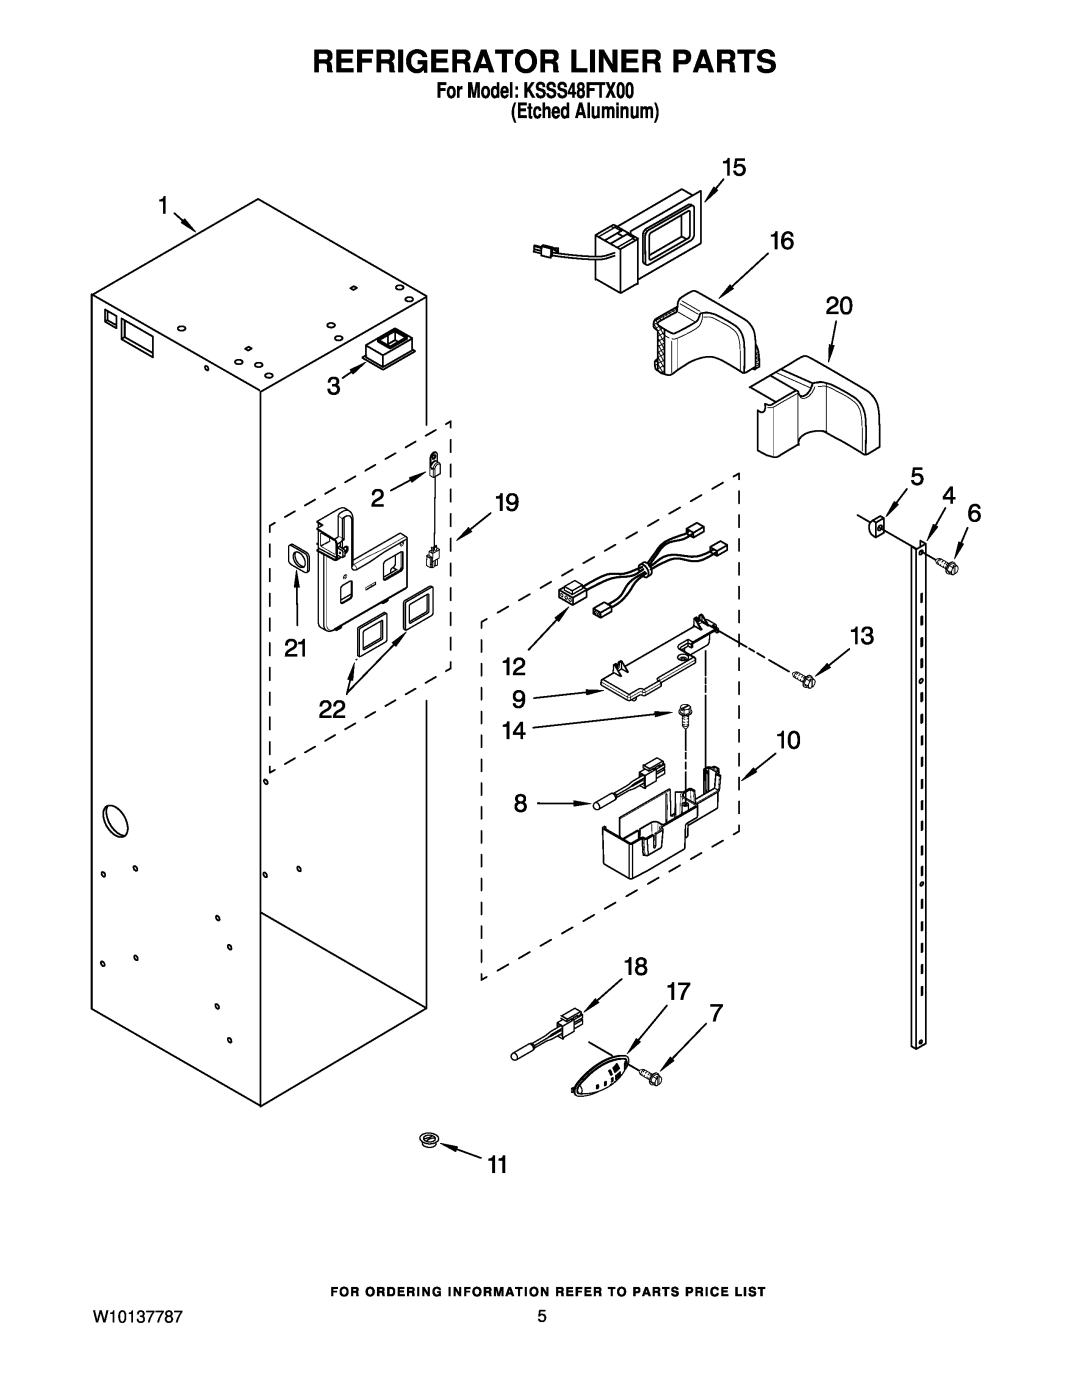 KitchenAid manual Refrigerator Liner Parts, W10137787, For Model KSSS48FTX00 Etched Aluminum 